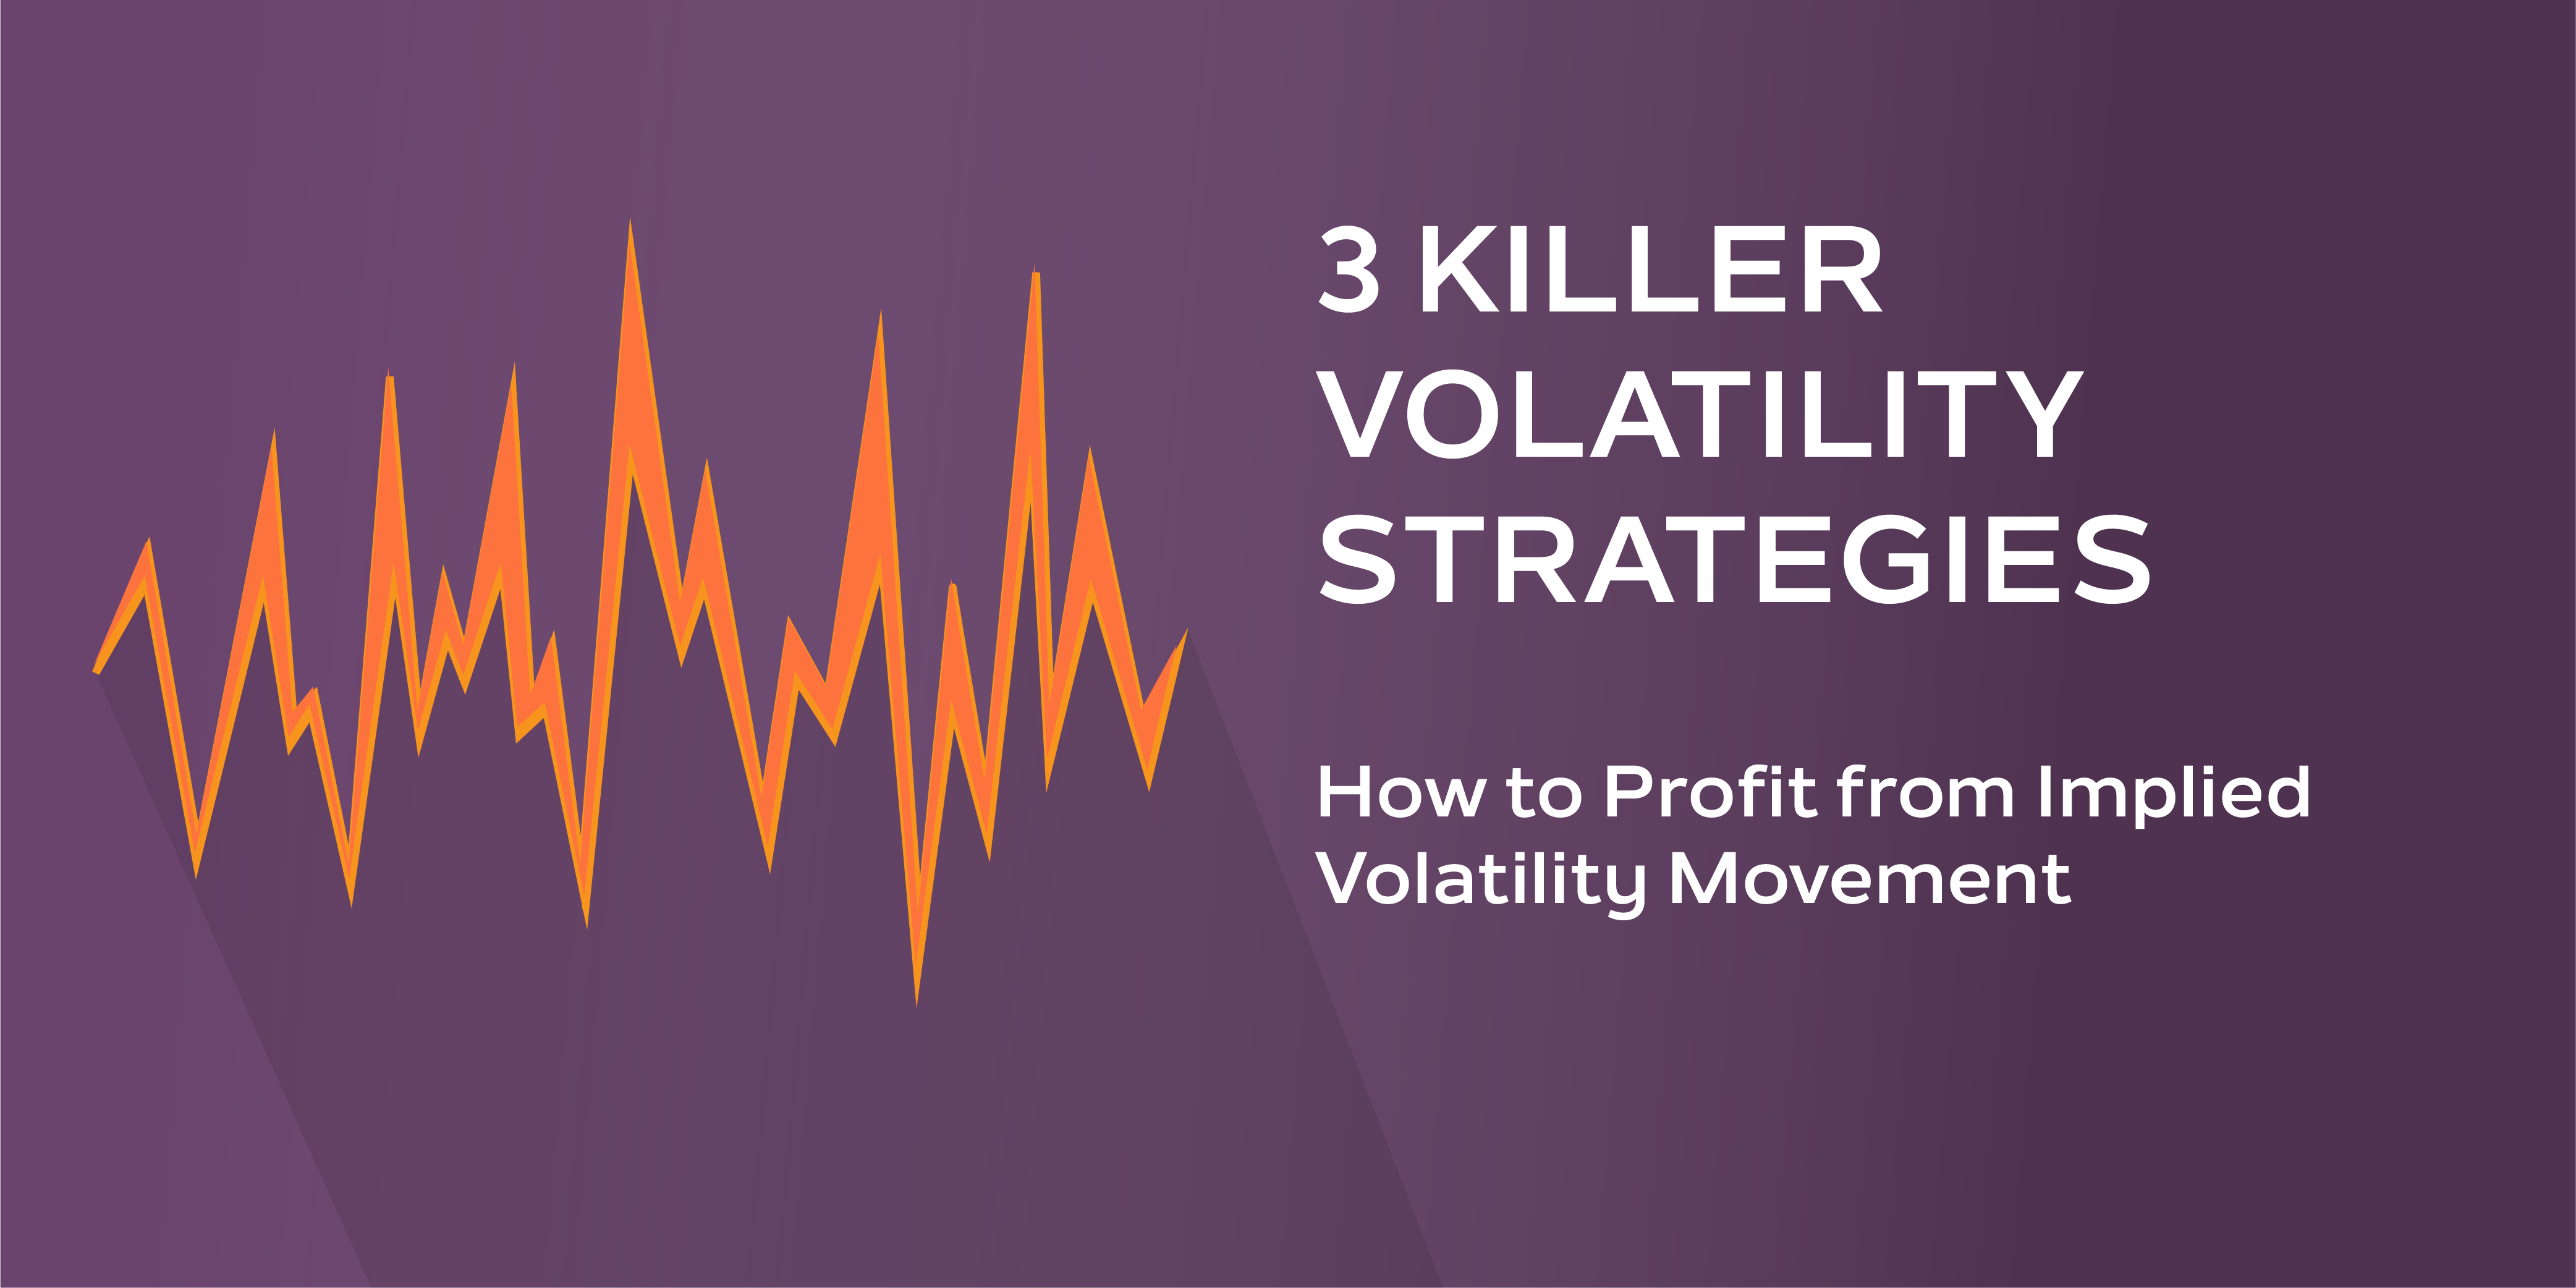 3 killer volatility